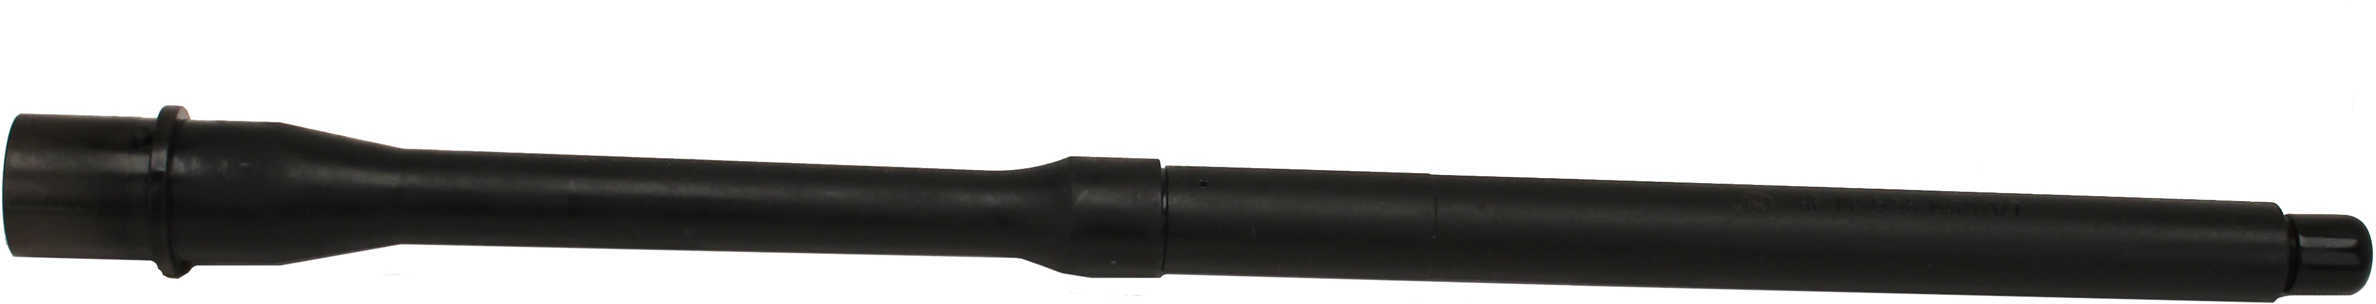 AR-15/M16 5.56x45MM Cold Hammer Forged Barrels